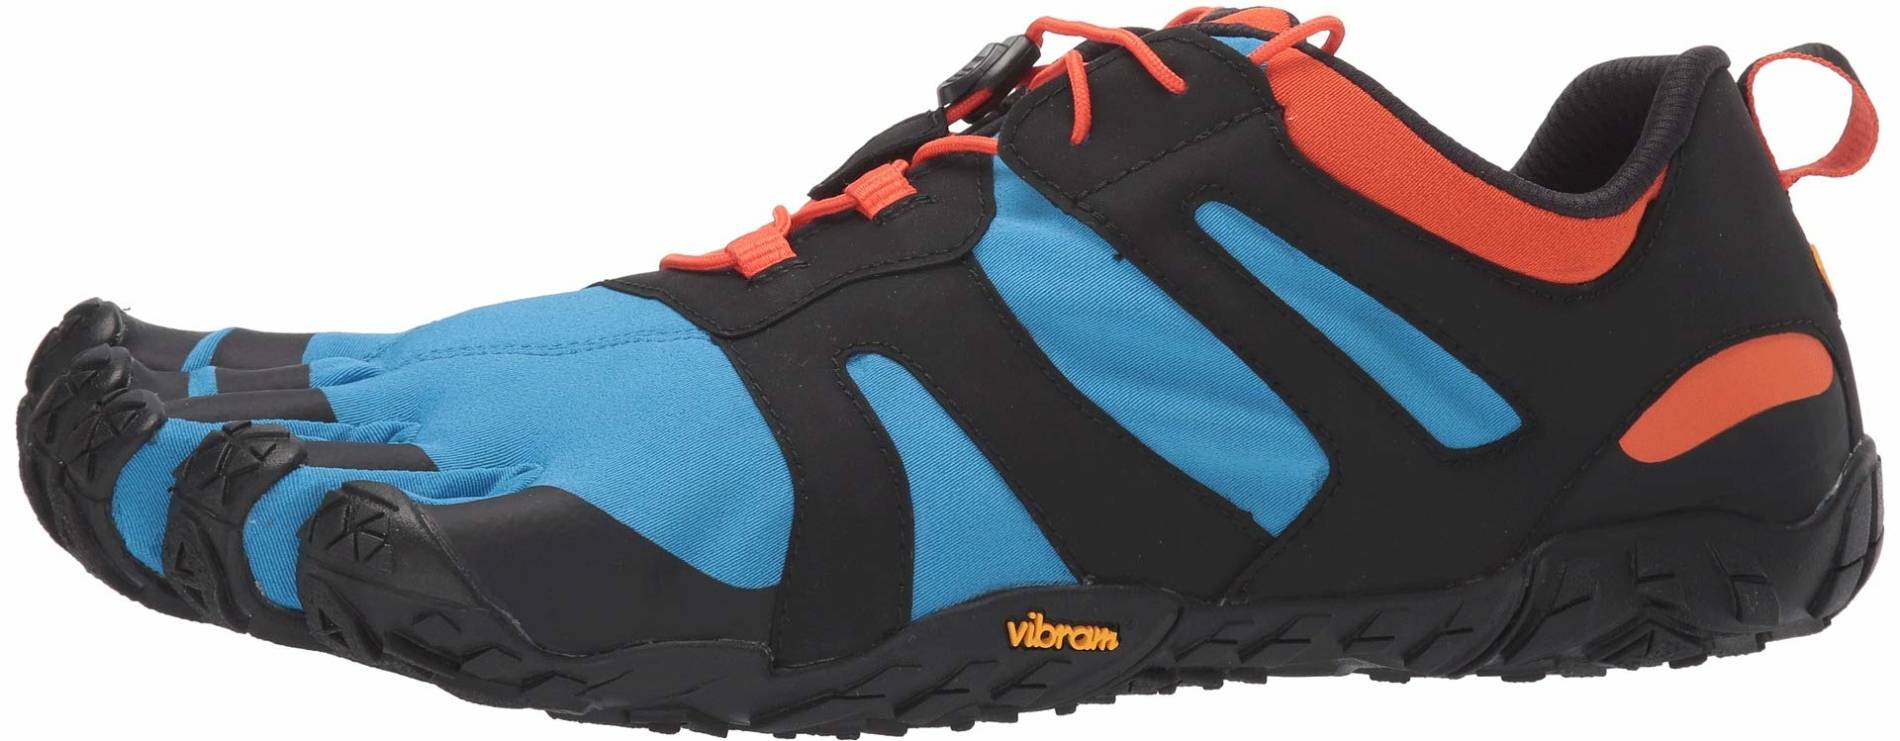 best vibram running shoes